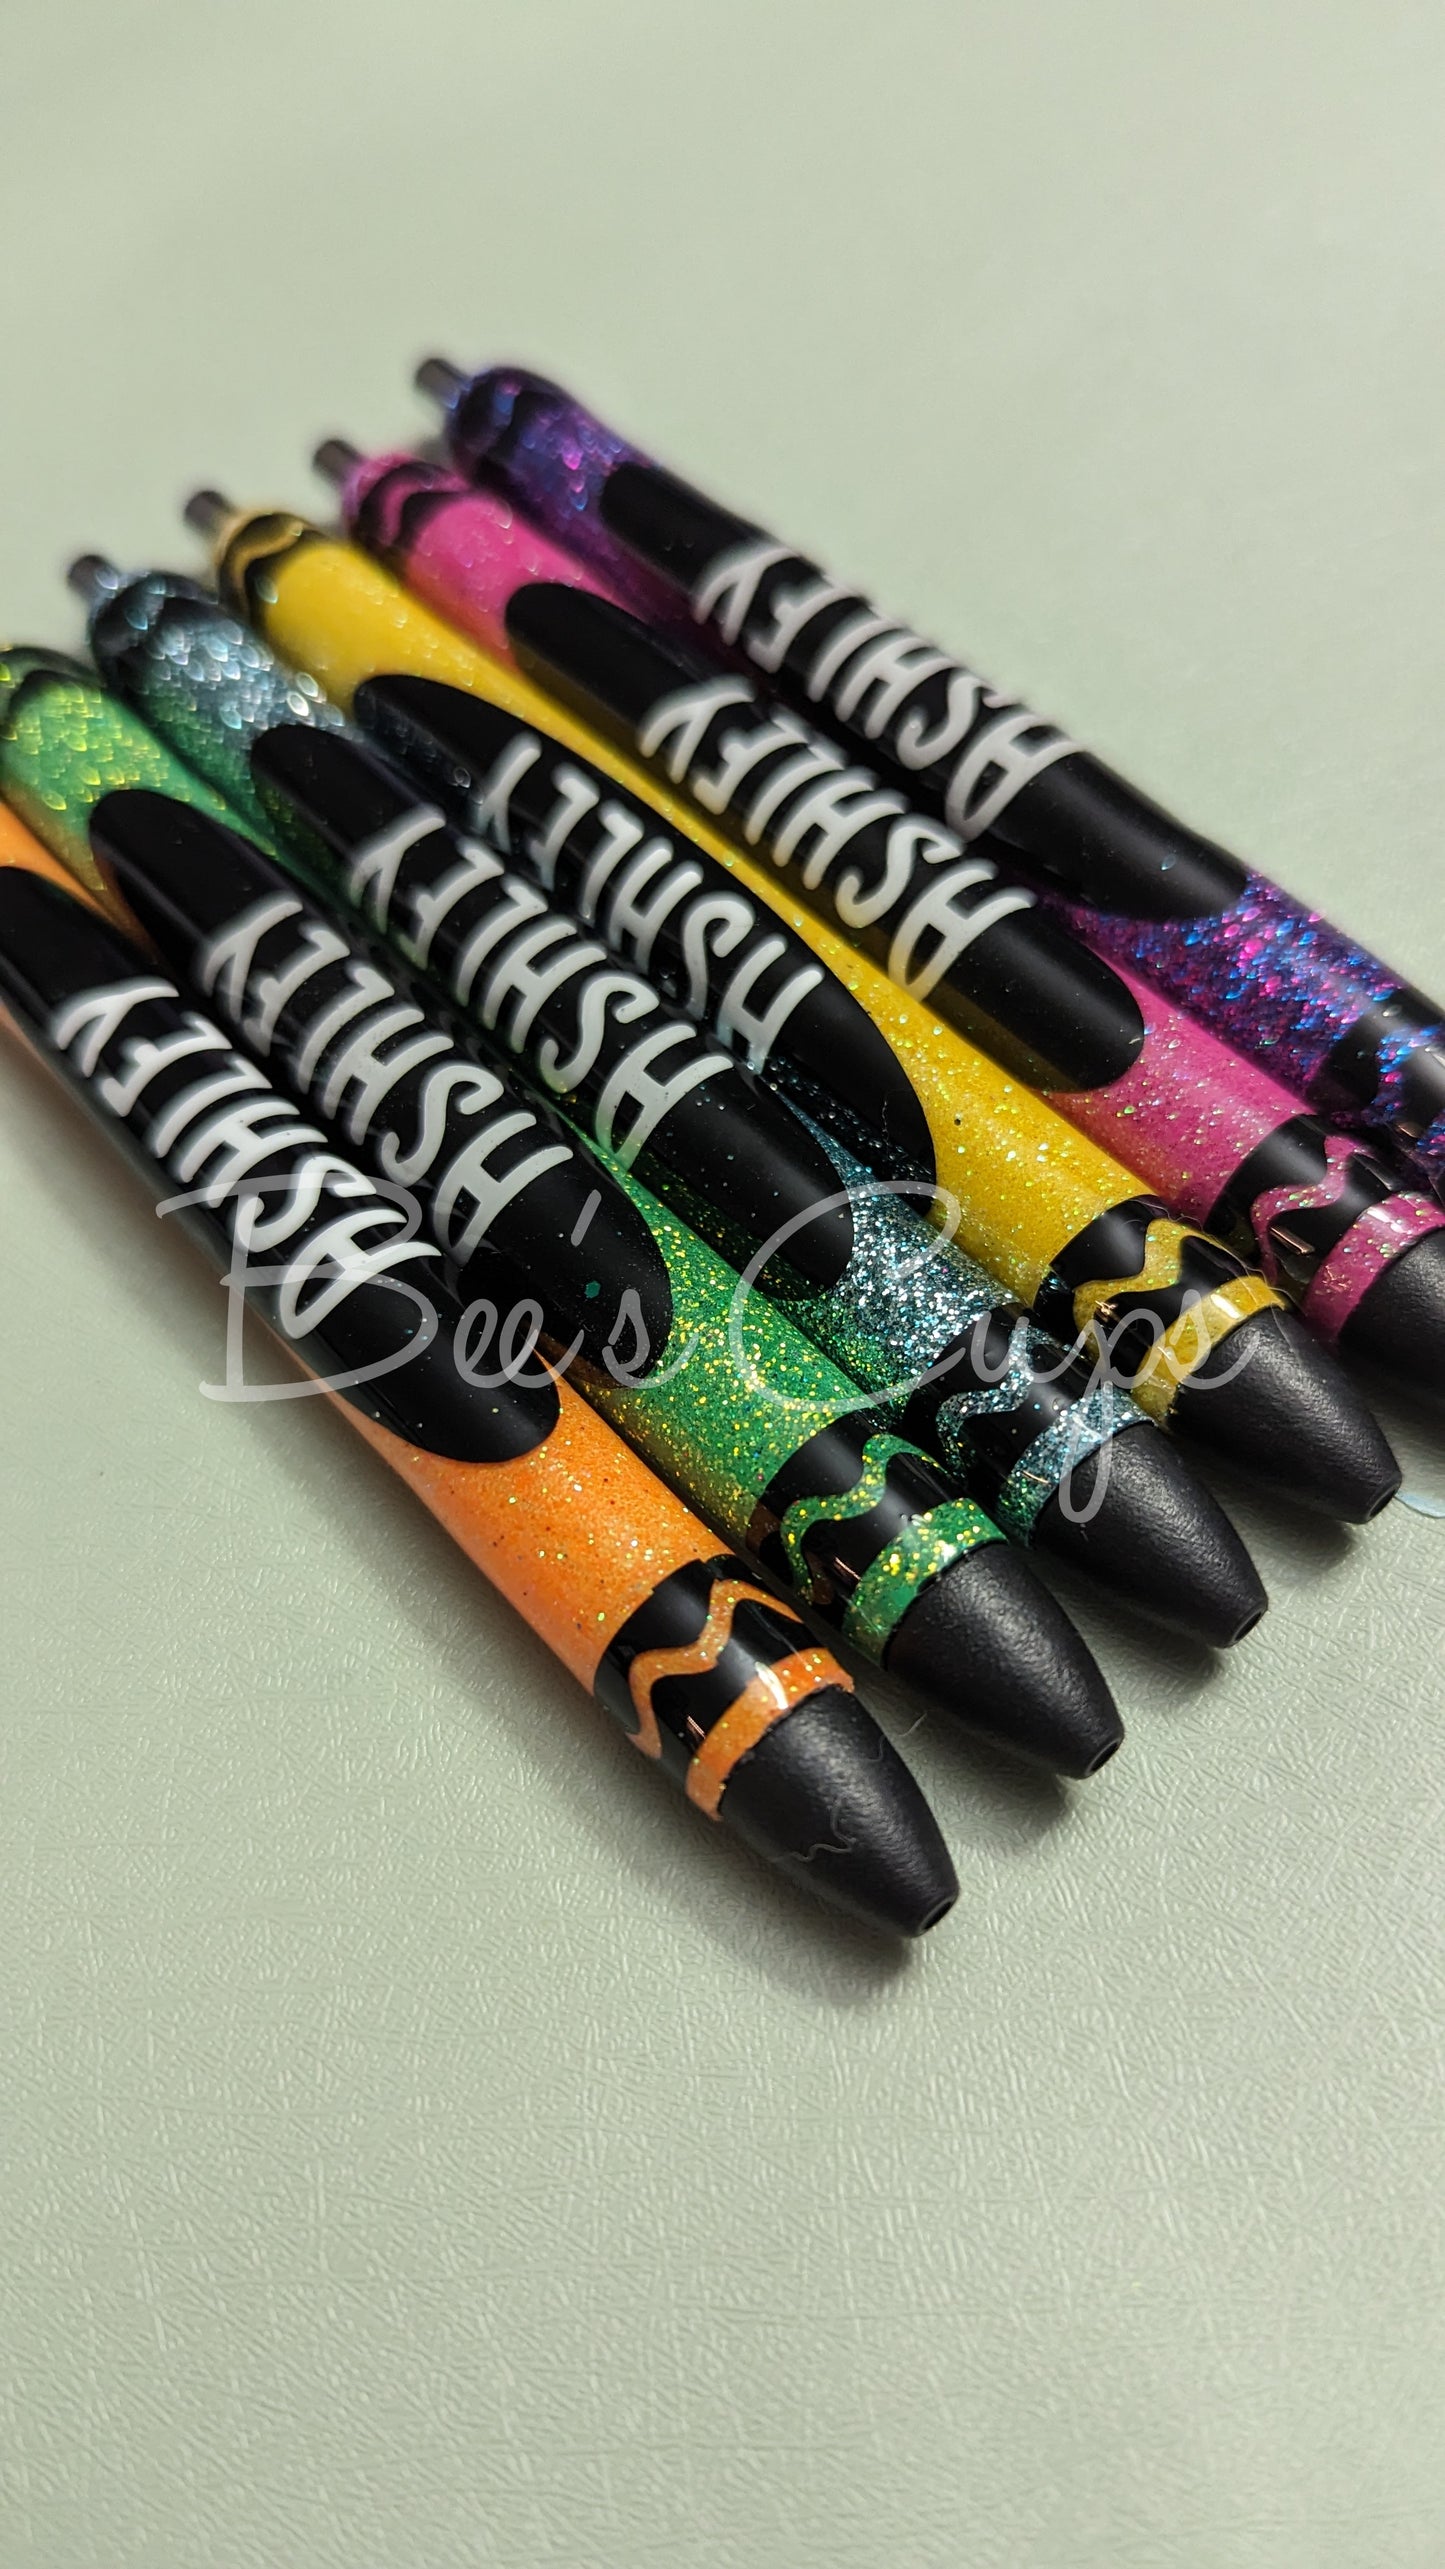 Crayon Pens and Mechanical Pencils